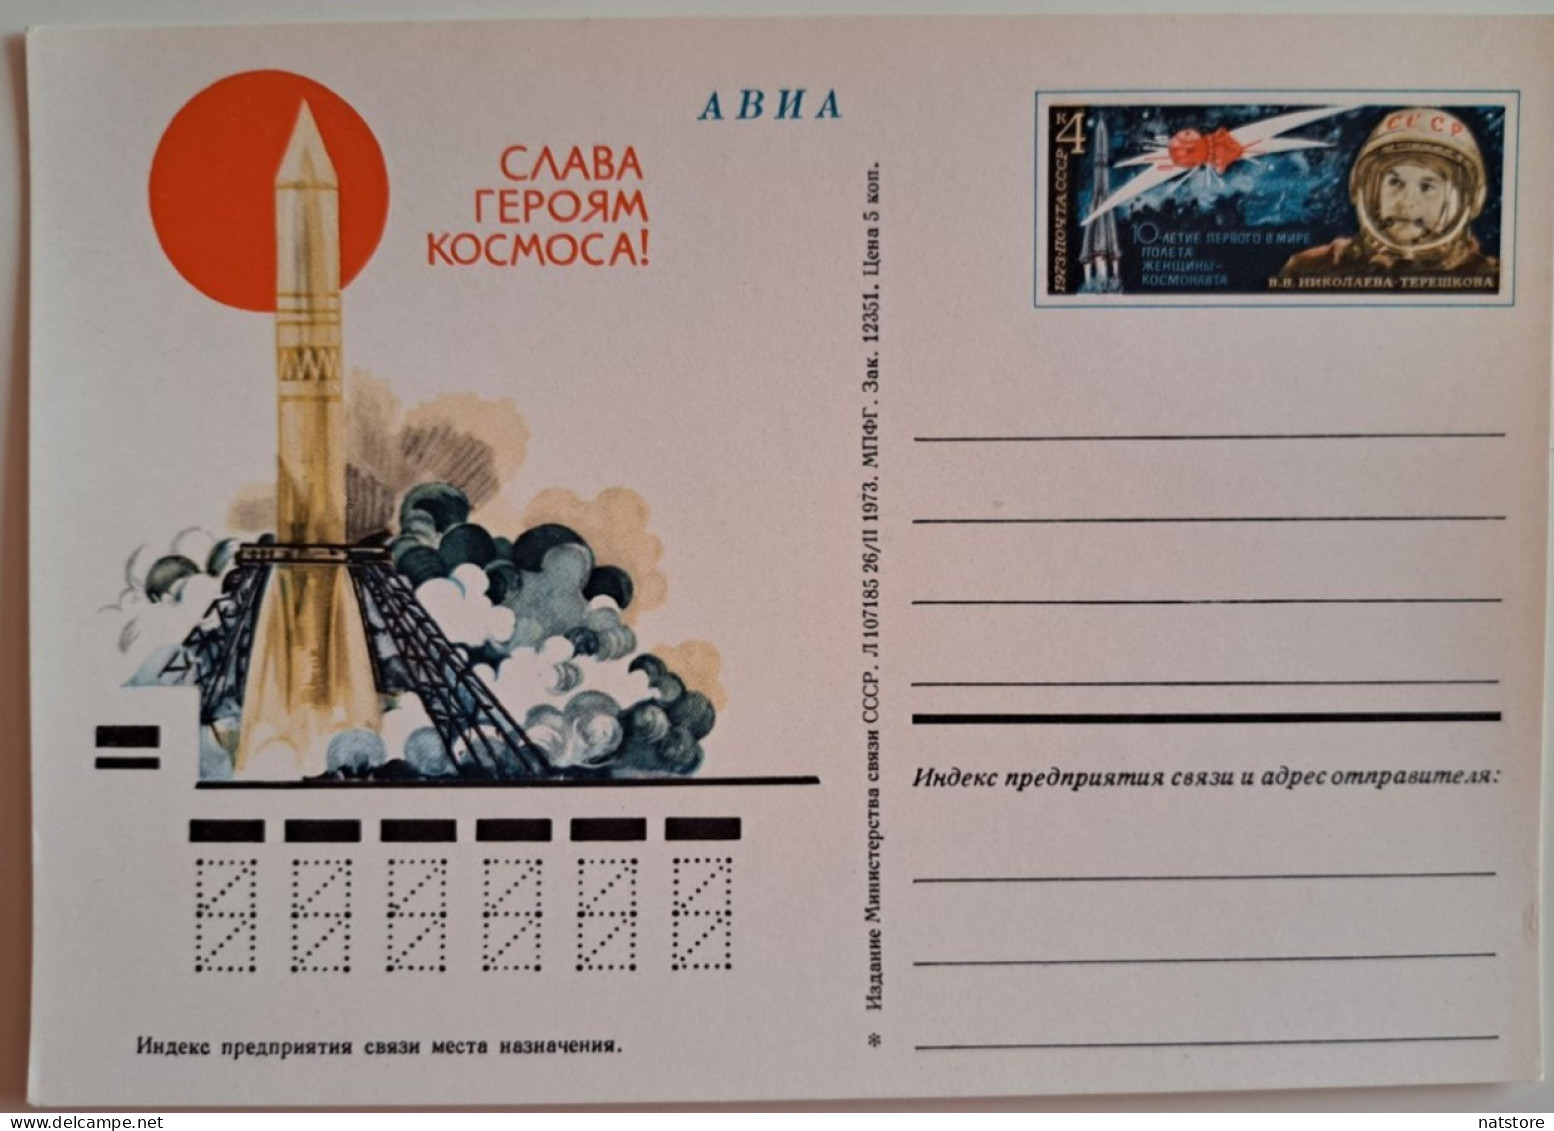 1973..USSR..POSTAL CARD  WITH STAMP..GLORY TO SPACE HEROES..V.V.NIKOLAEVA-TERESHKOVA - Russie & URSS